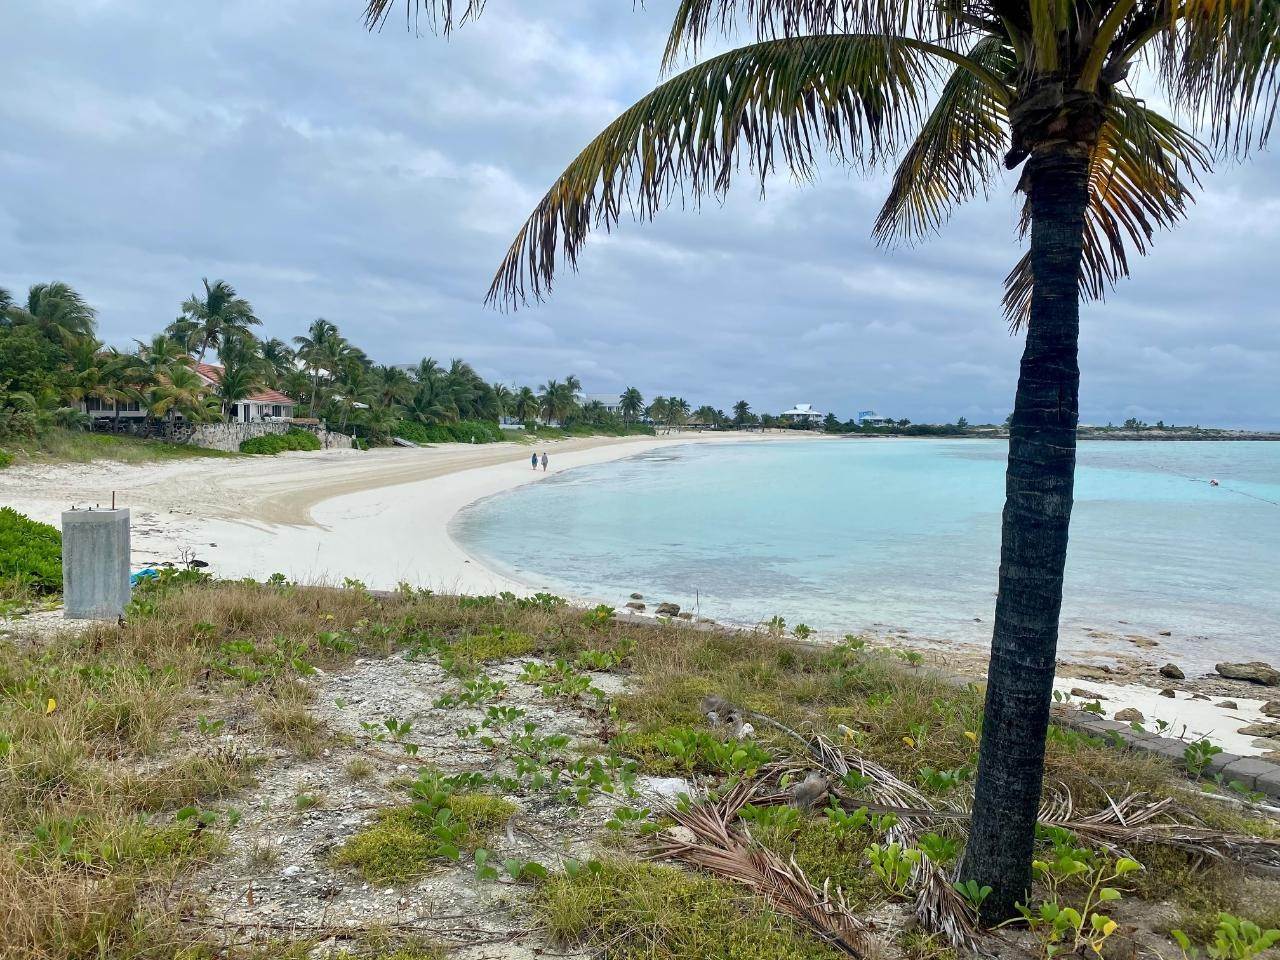 Lots / Acreage for Sale at Chub Cay, Berry Islands, Bahamas